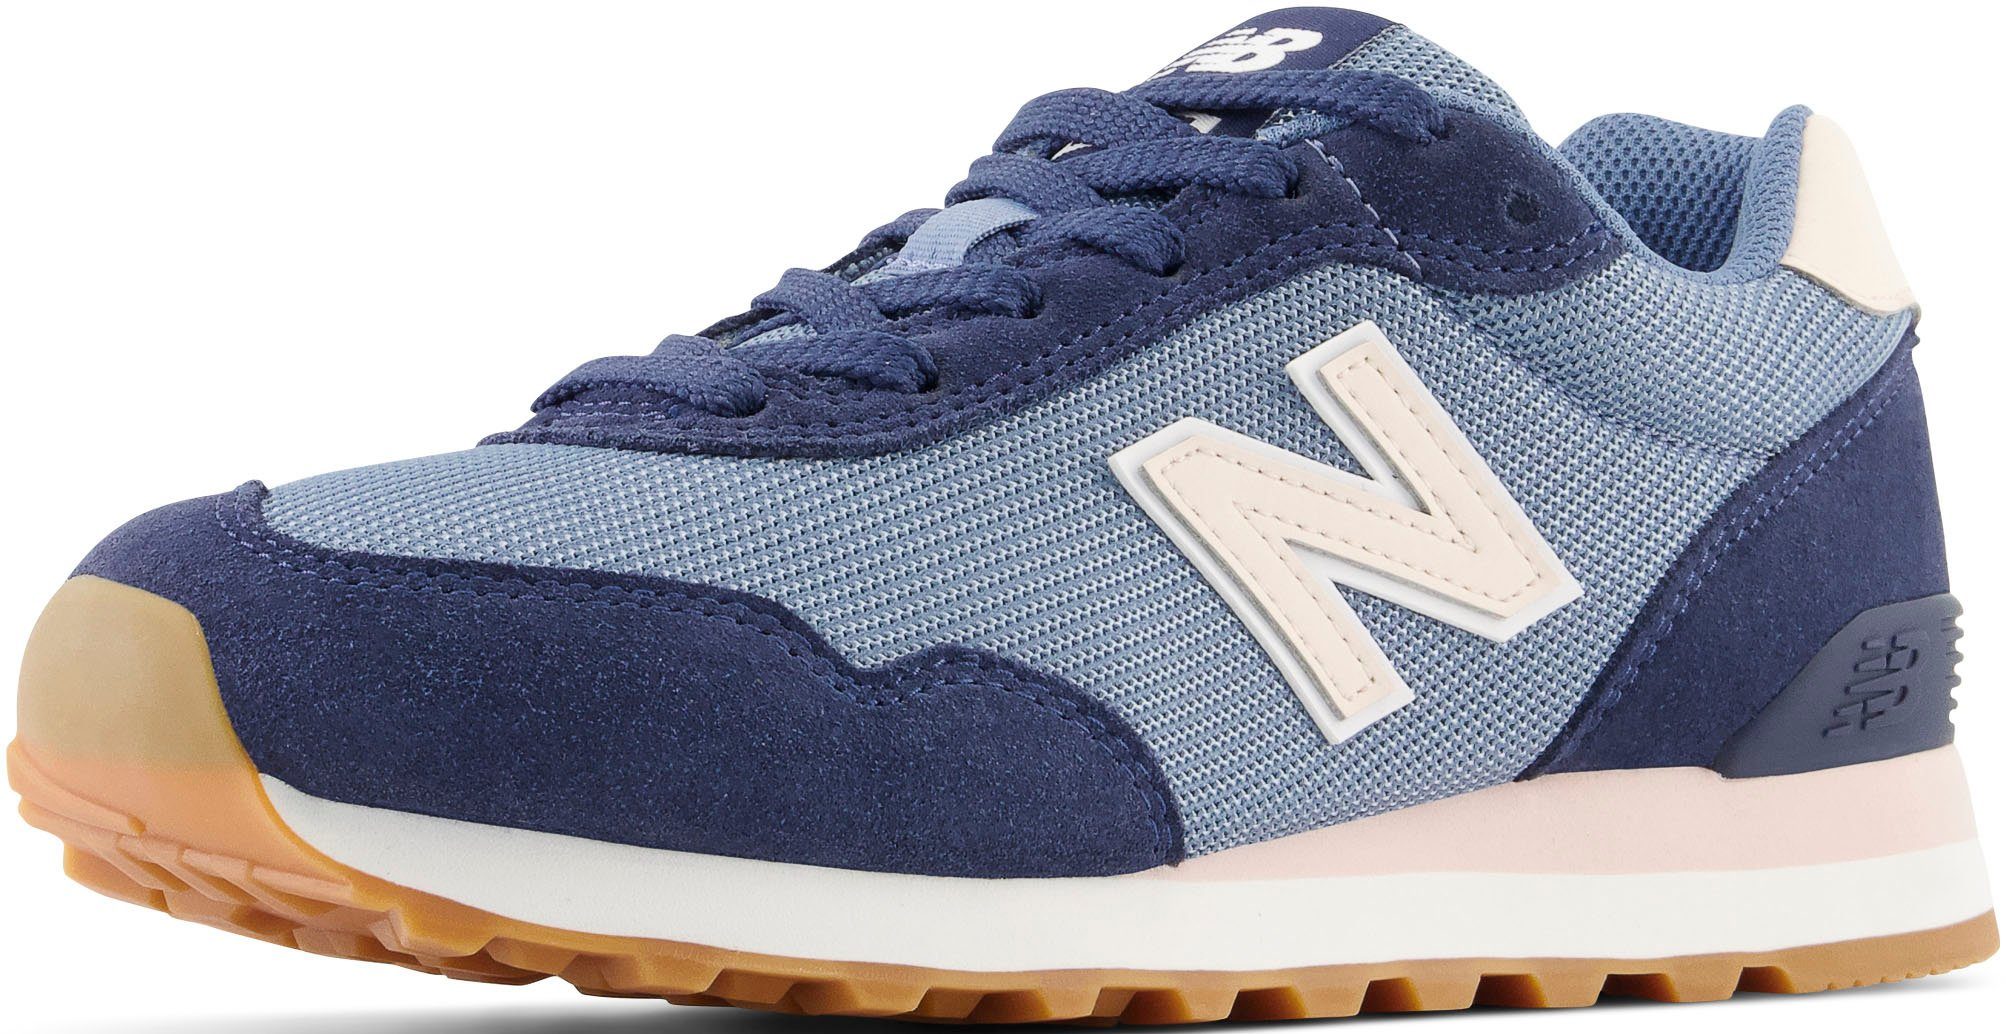 New navy-blau WL515 Balance Sneaker